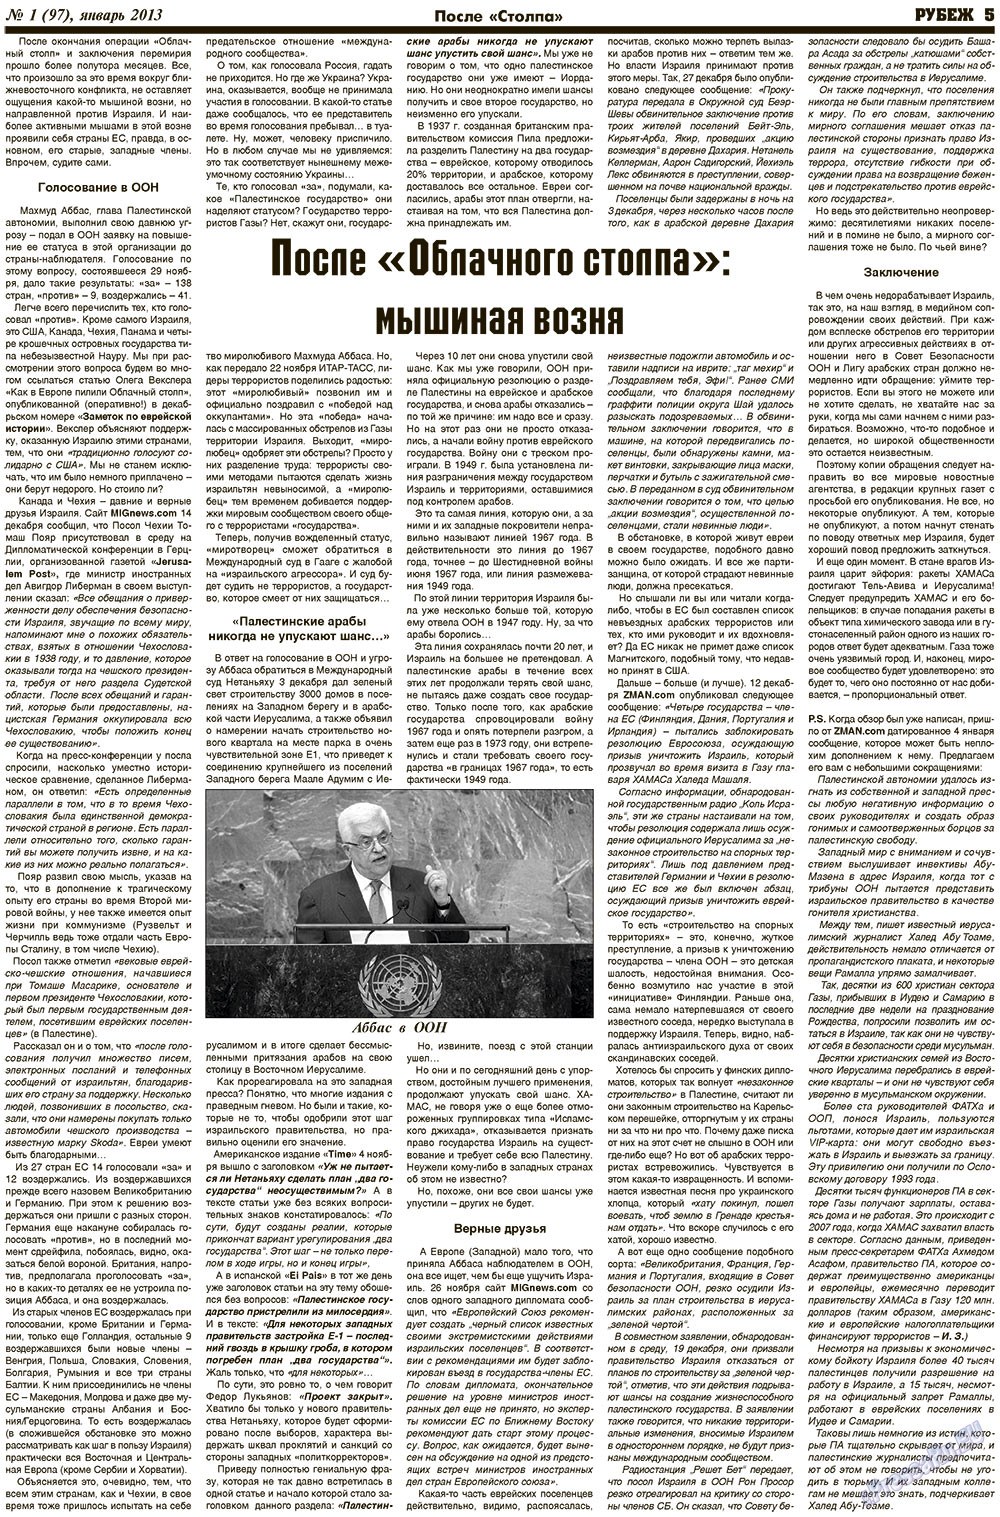 Рубеж, газета. 2013 №1 стр.5